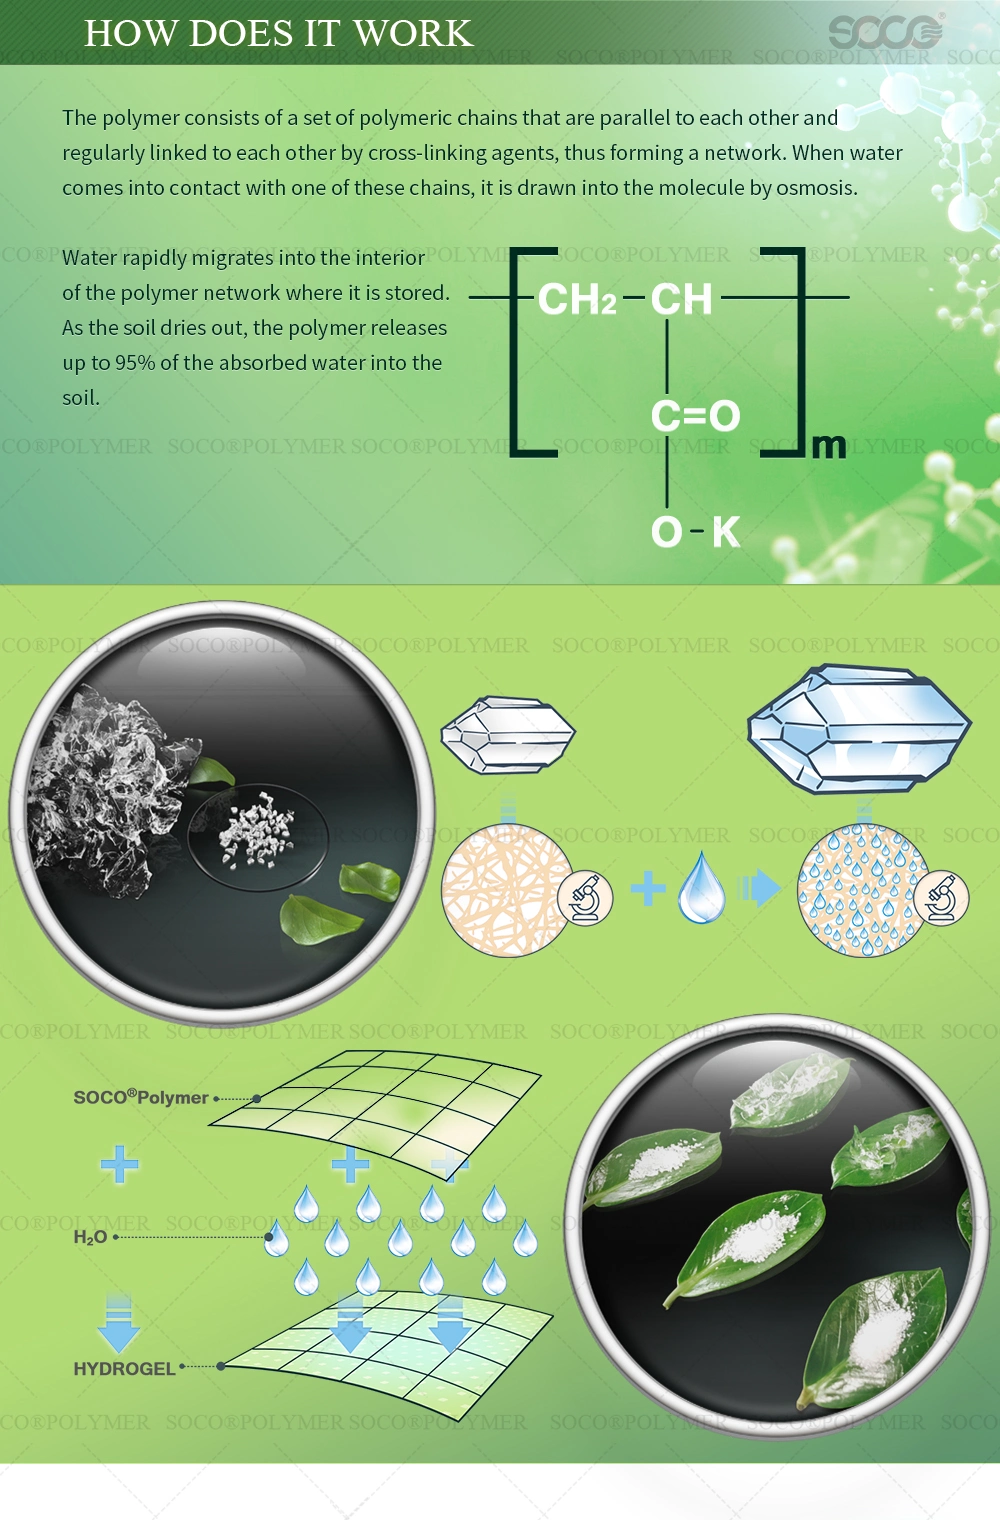 Biodegradable Super Absorbent Polymer for Planting Lawns